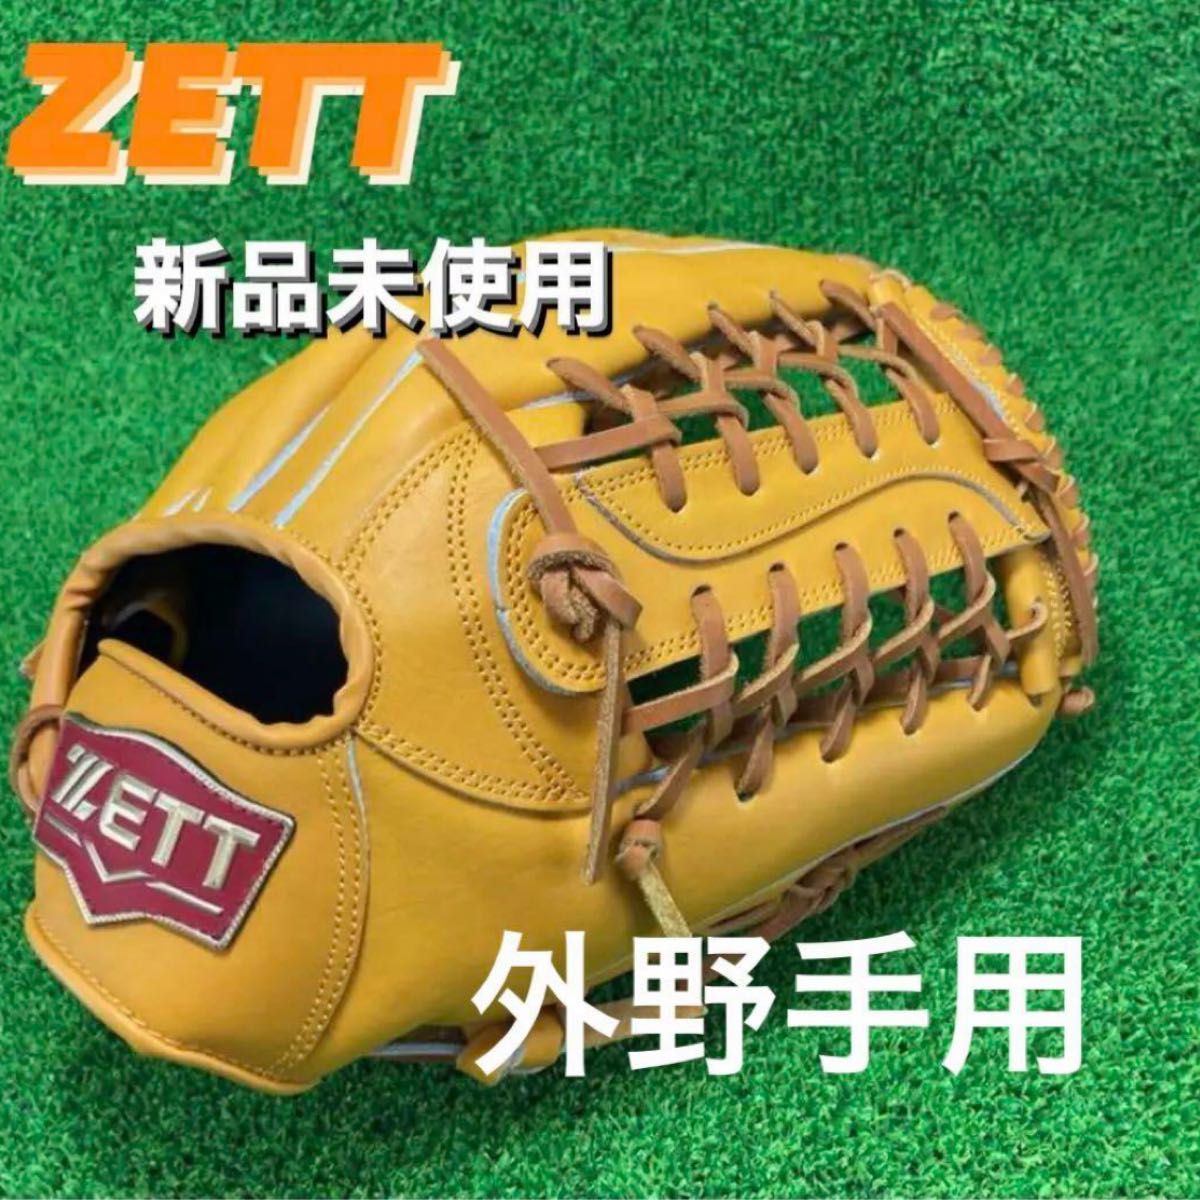 ZETT ゼット 外野手用 外野用 硬式グローブ 硬式野球　右投げ　707 グローブ